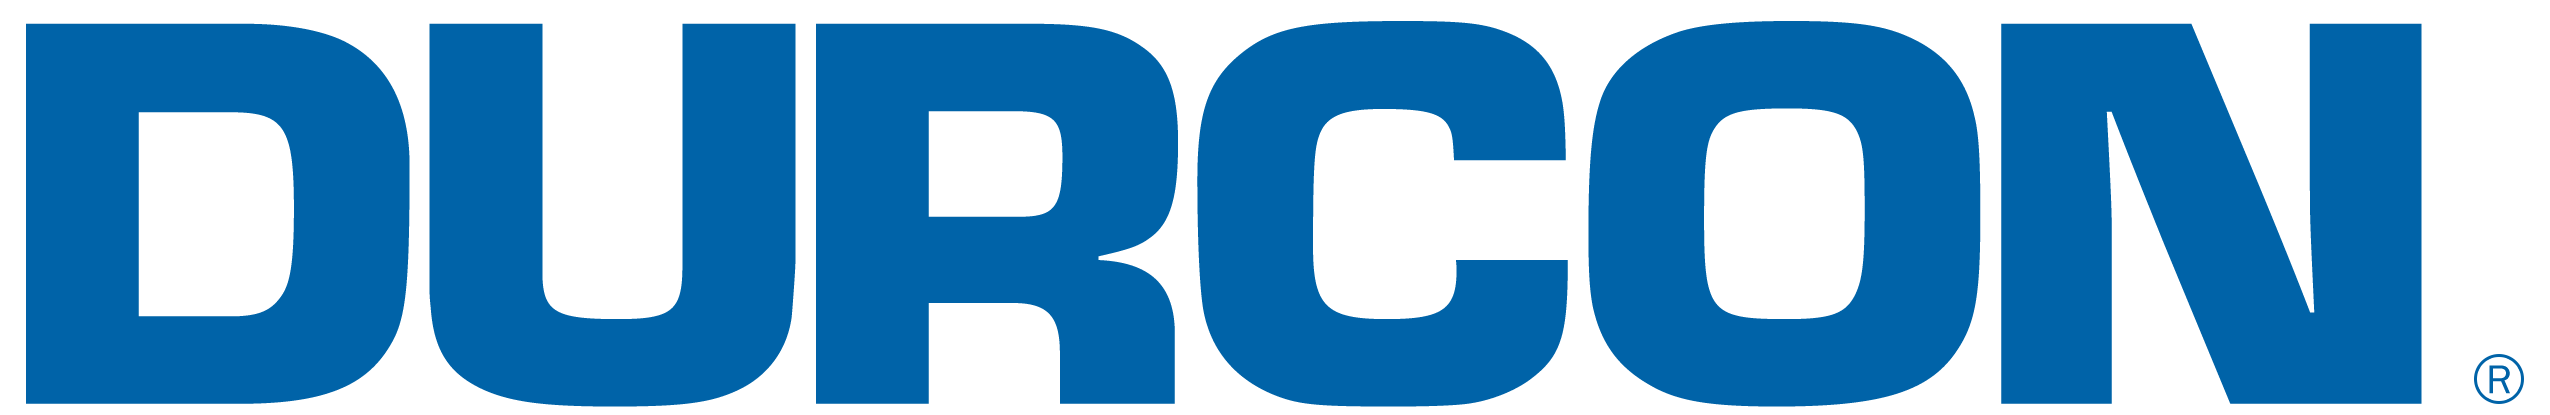 DURCON-Logo_2019-FINAL.png